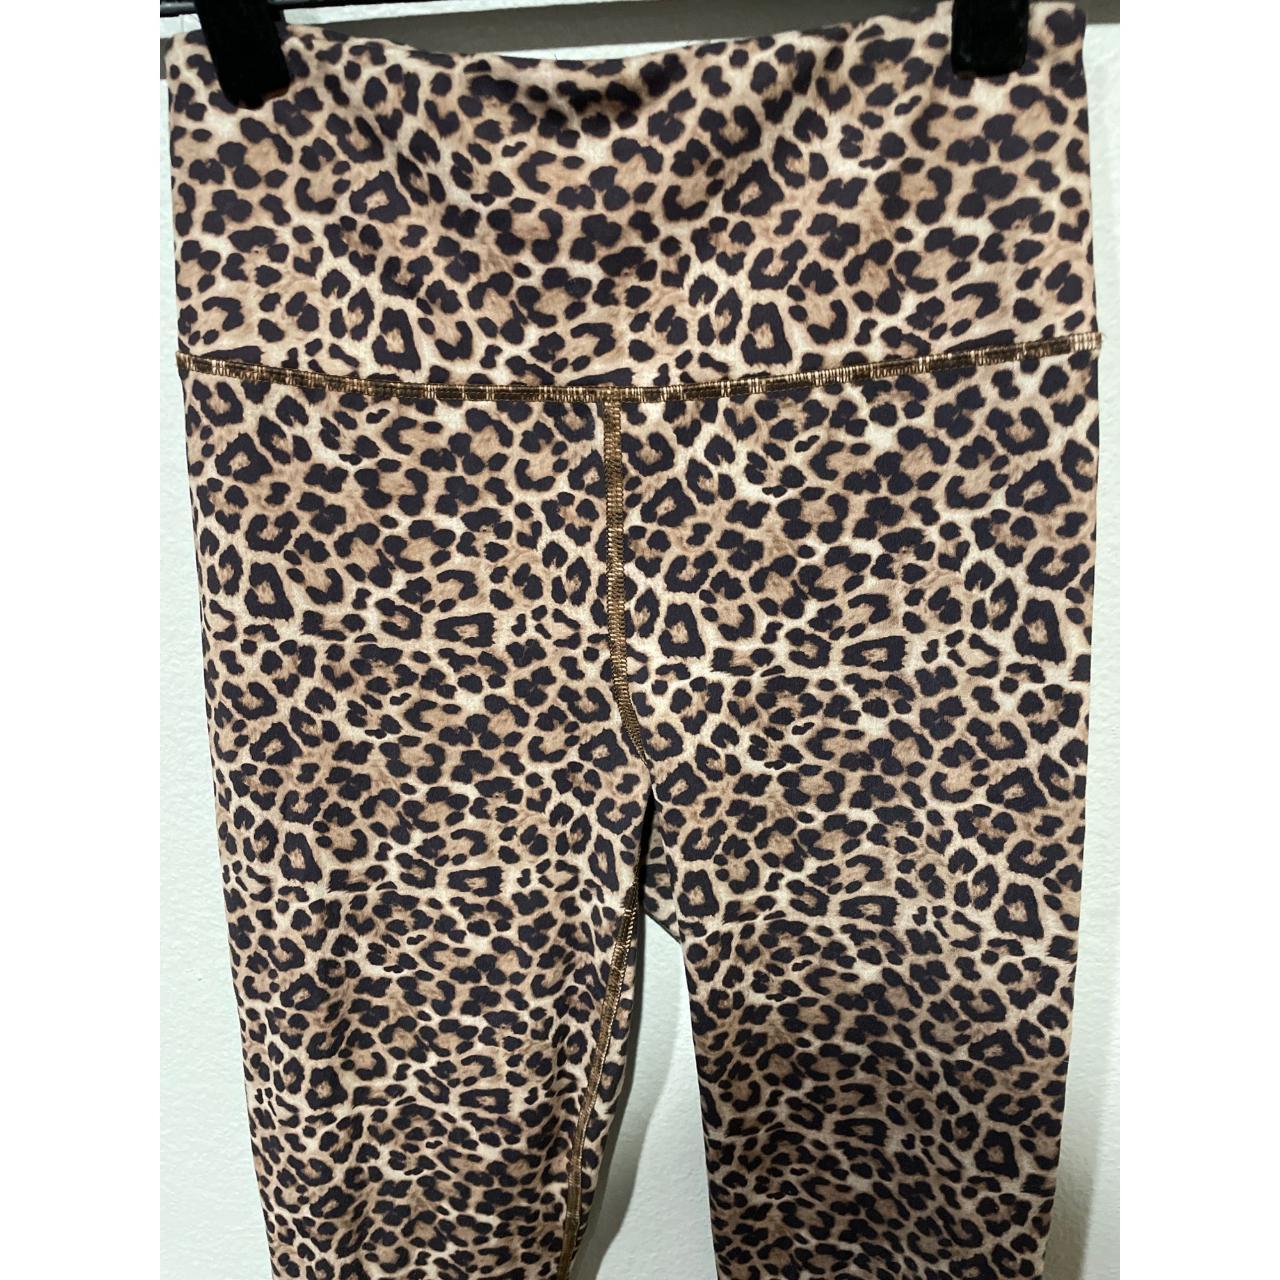 American Eagle Pants Everything Pocket Leggings Cheetah Leopard Print sz S